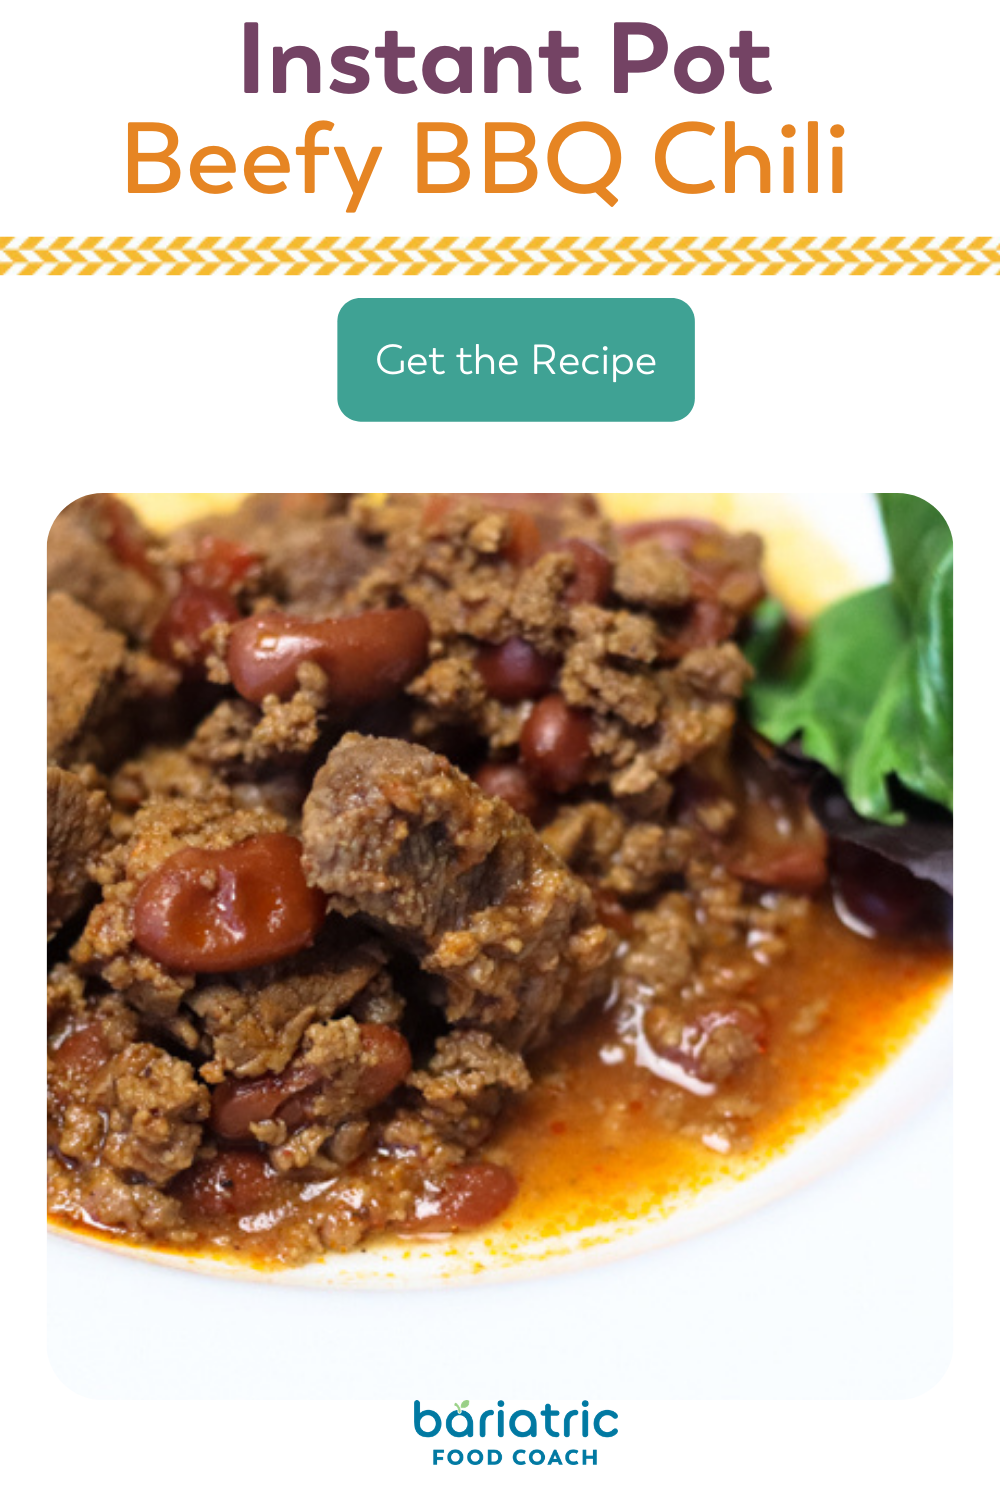 Beefy BBQ Chili | Bariatric Food Coach